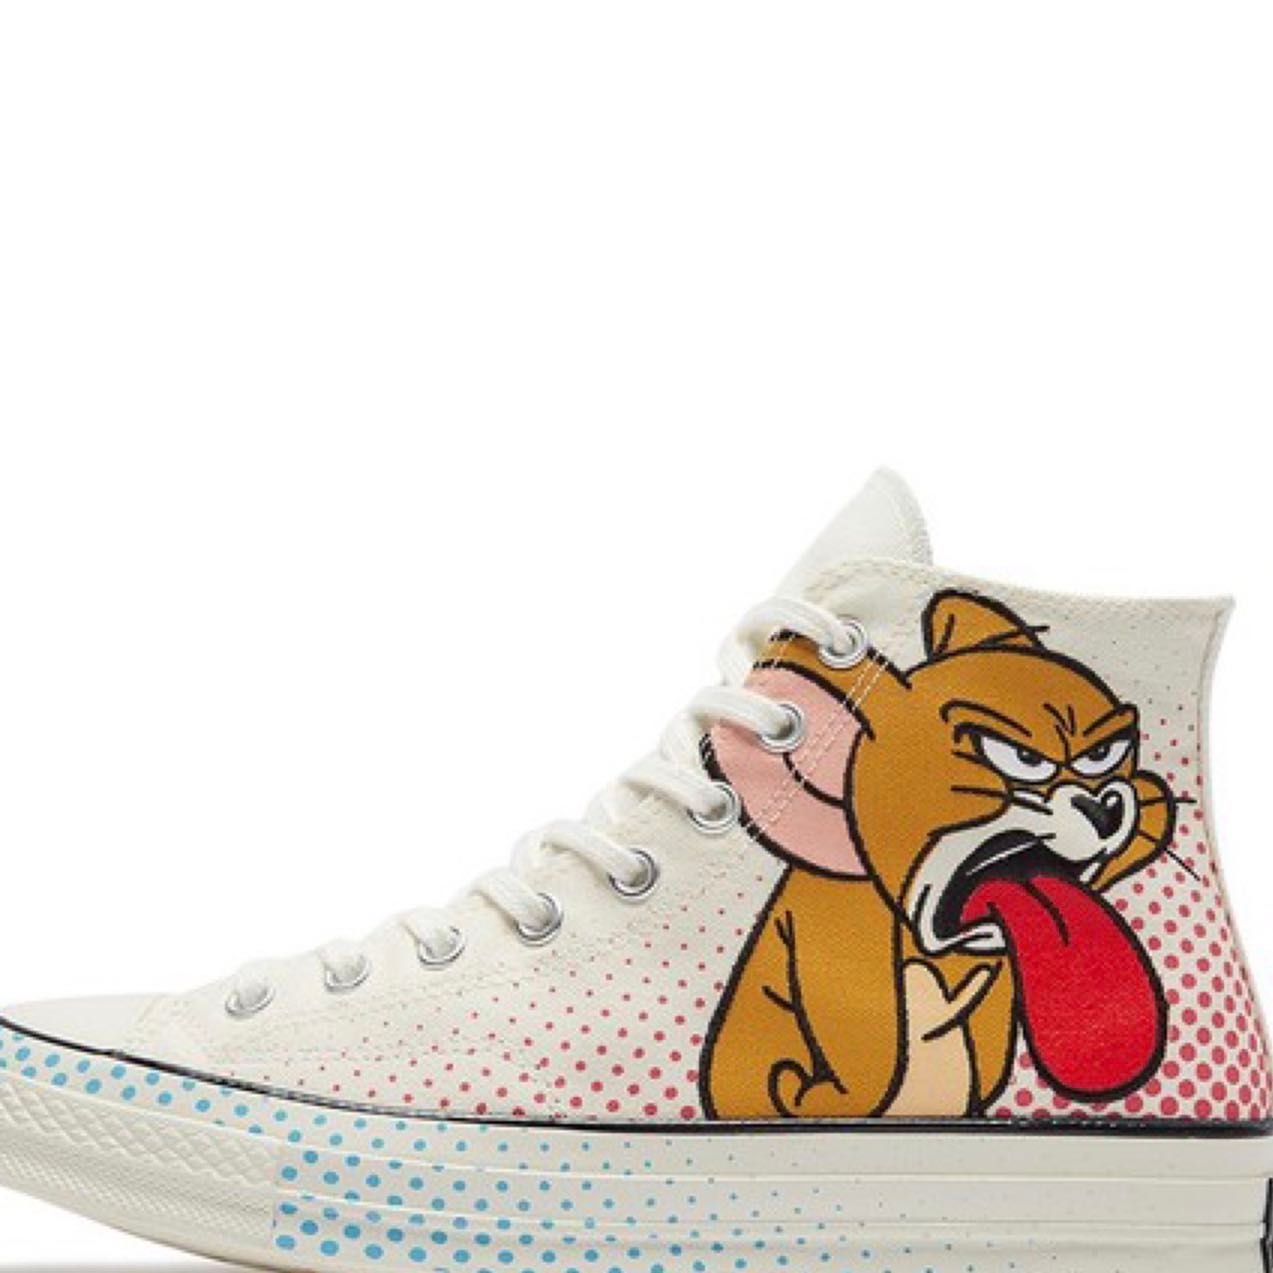 Acquista Scarpe Di Tela Tom E Jerry Moda Casual Canvas Designer Running  Scarpe Da Skateboard Sneakers Scarpe Di Tela Alte 35 41 A 56,42 € Dal  Ataiger | DHgate.Com